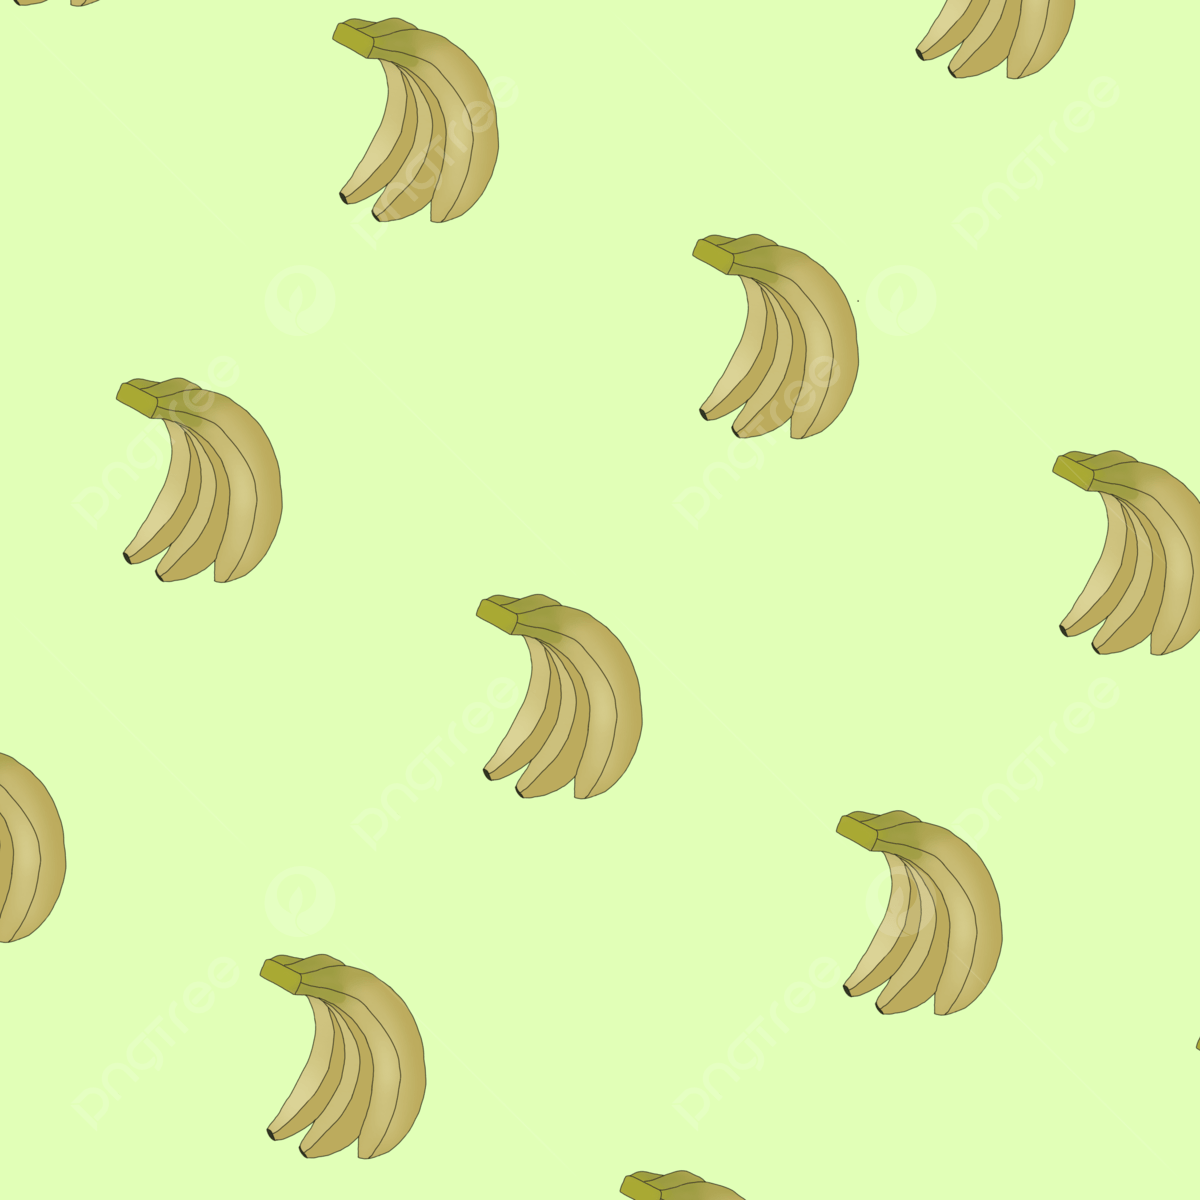 Banana Fruit Background Image, Banana, Fruit, Food Background Image And Wallpaper for Free Download